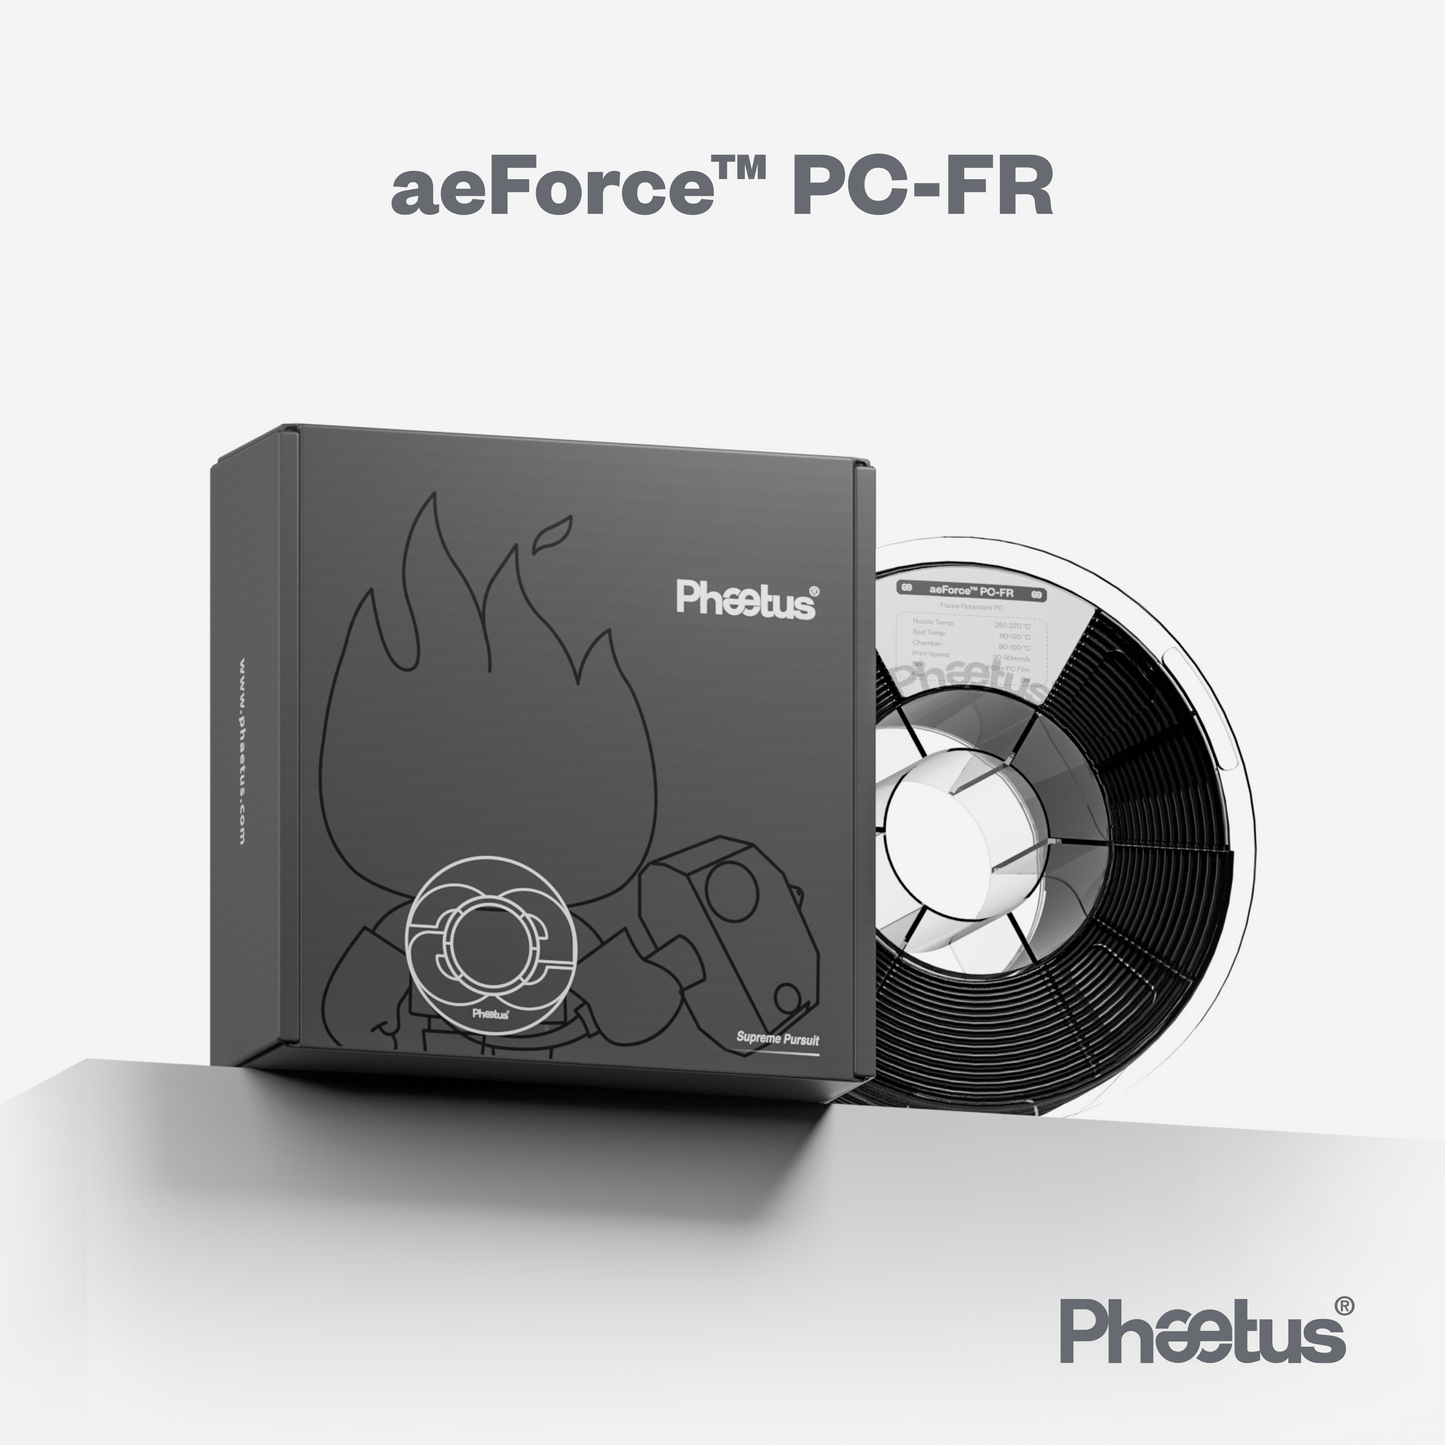 aeForce™ PC-FR